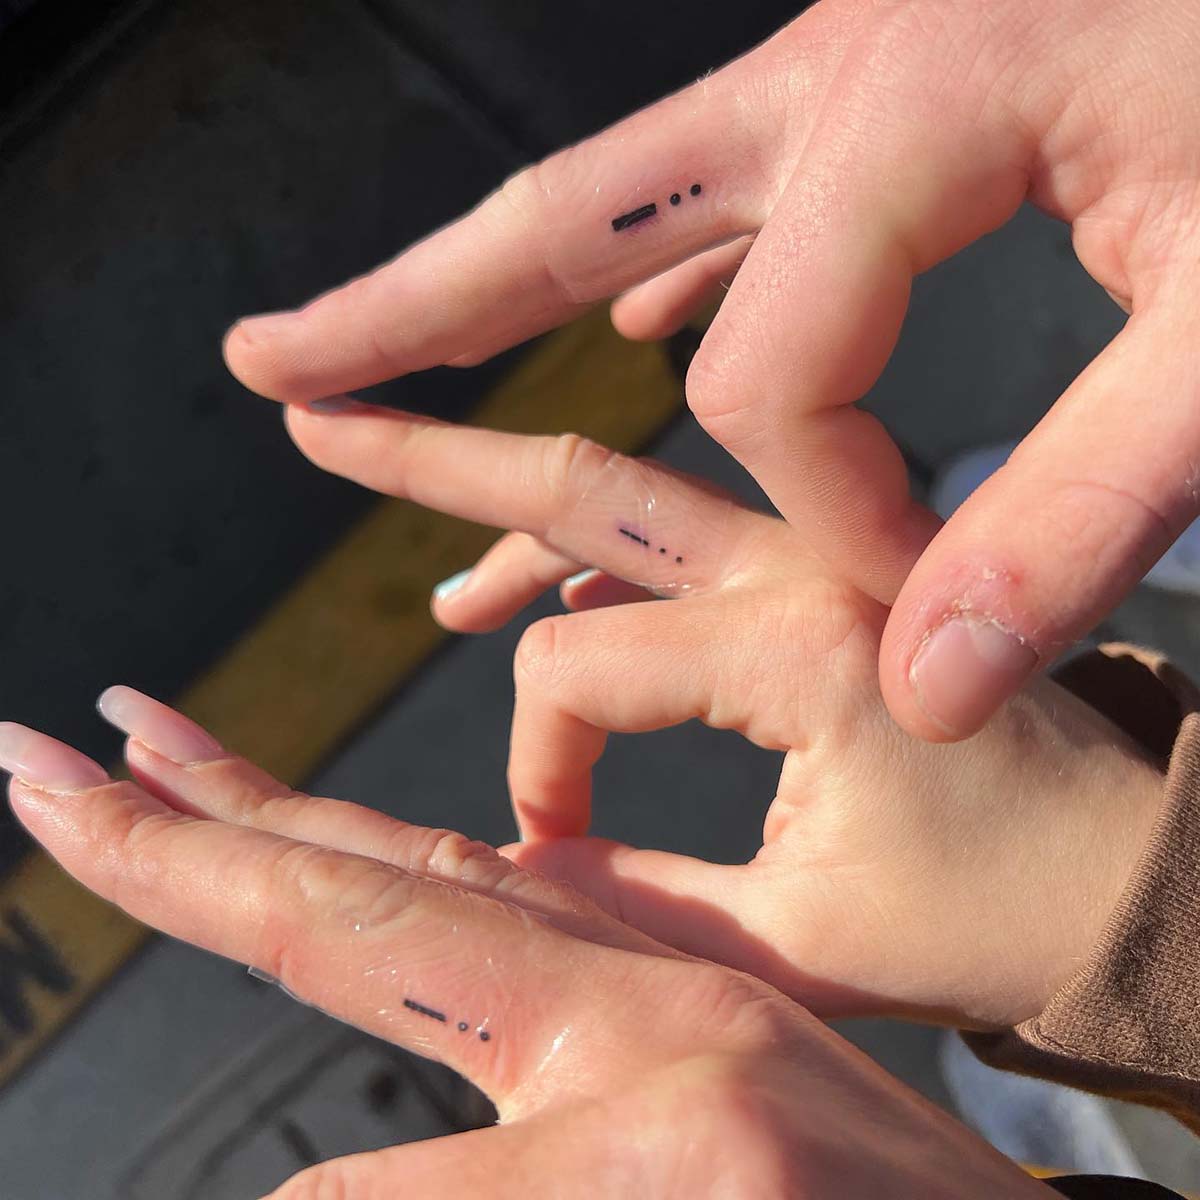 Freak on a Lesh Tattoo - Dainty finger tattoos, who wants me to design some  finger designs? 🖐🏻 - MESSAGE TO BOOK - #fingertattoos #tattooartist  #uktattooartist #juniortattooartist #traditionaltattoo #blackandgreytrad  #blackwork #flashdesigns ...